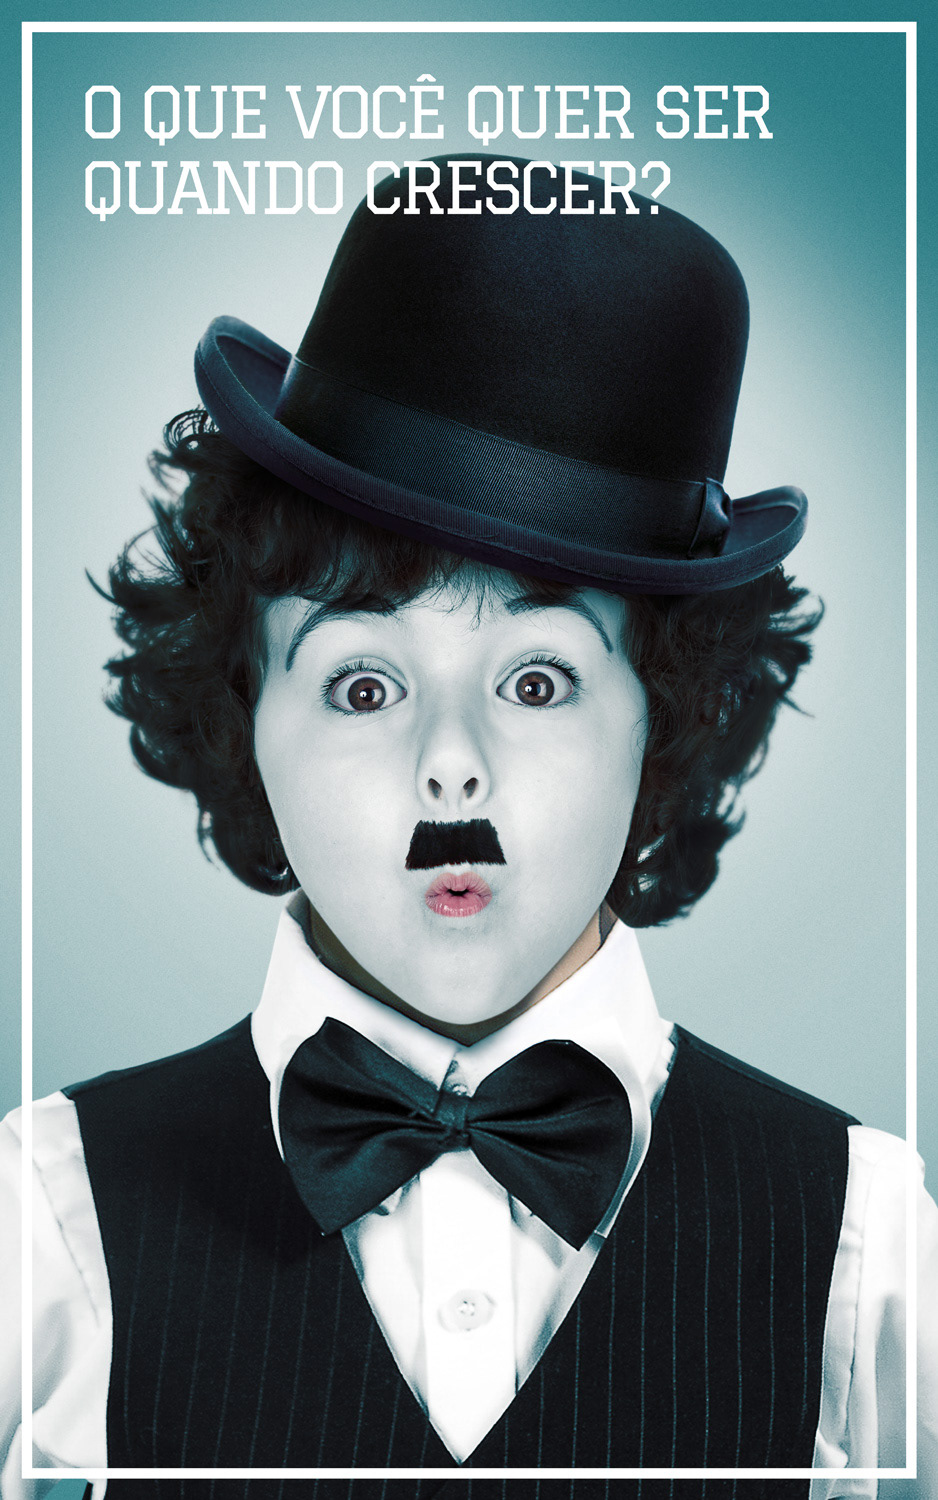 poster kiss Chaplin eistein child children blue cartaz group band song artist cover rock movie